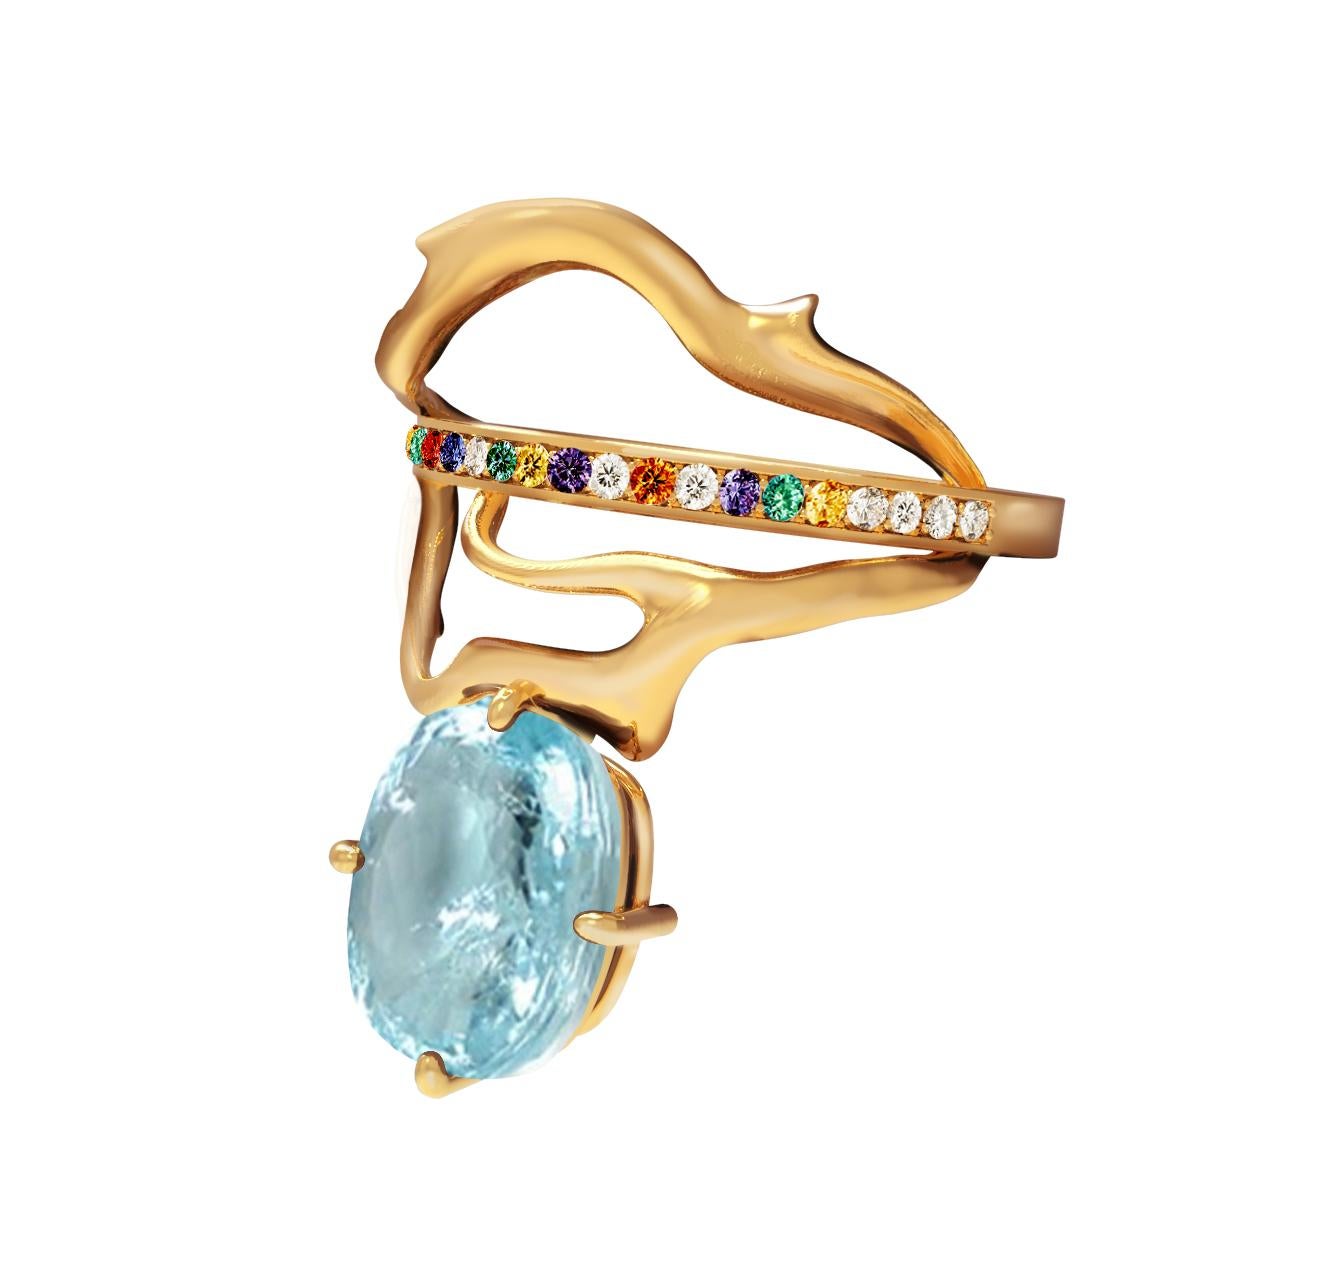 Contemporary 18 Karat Gold Tibetan Ring with Paraiba Tourmaline, Diamonds and Emeralds For Sale